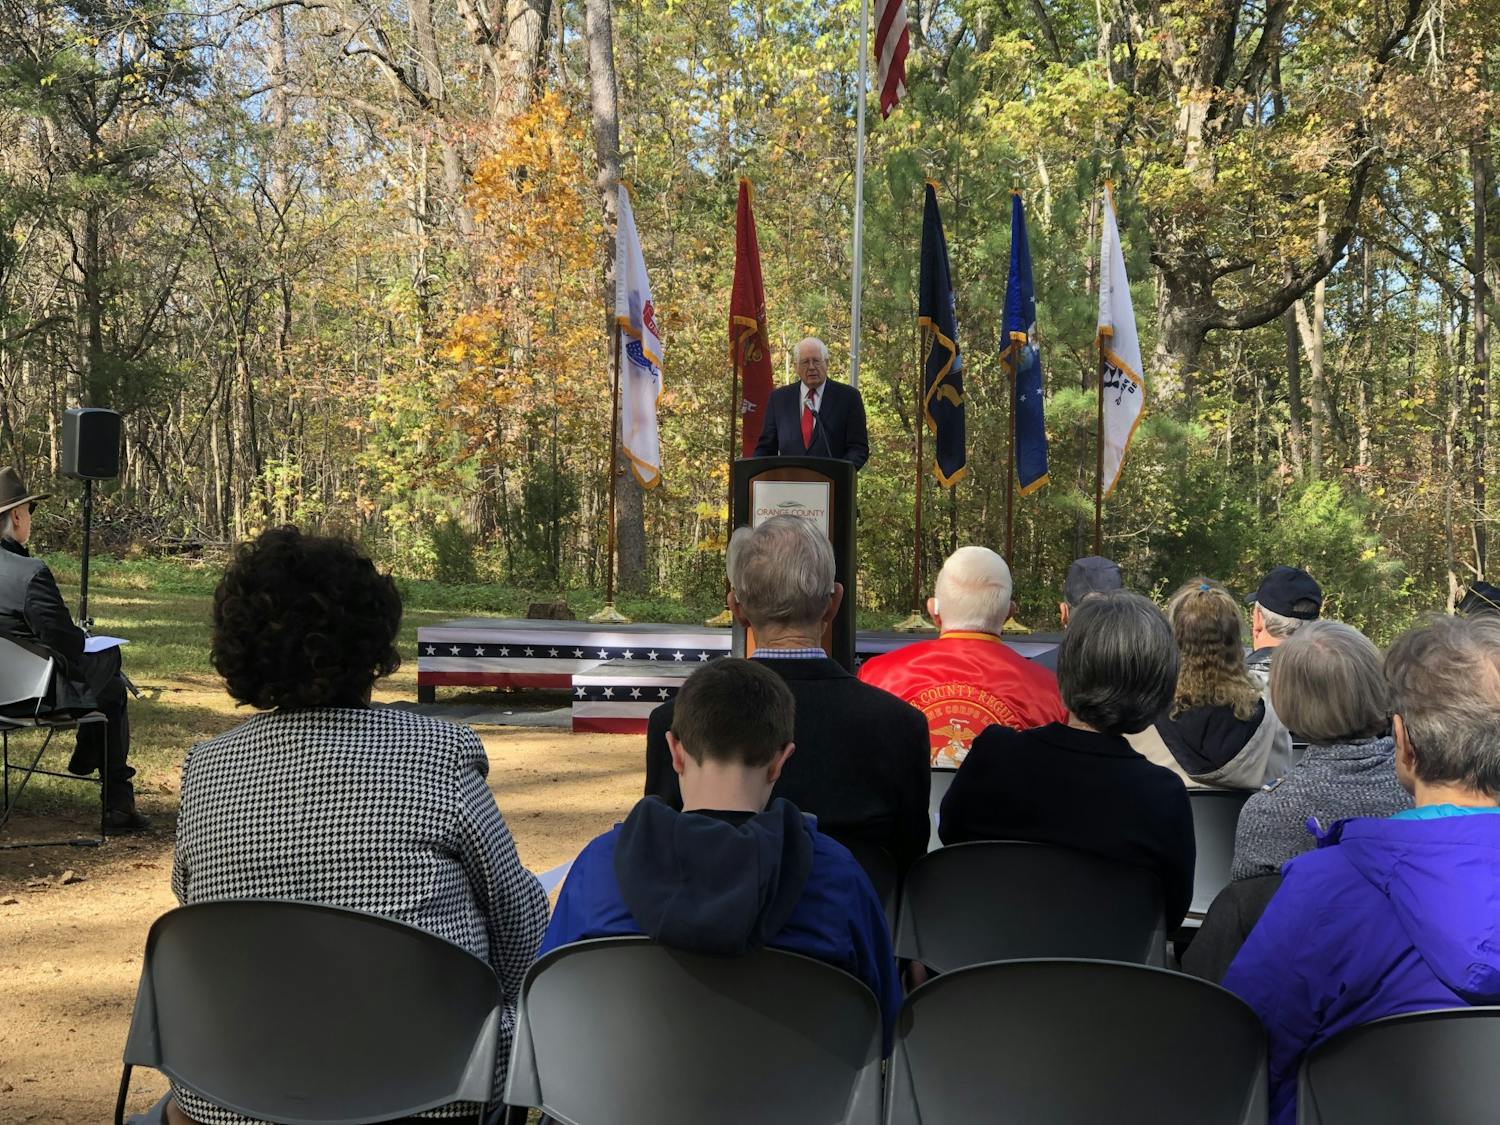 U.S. Rep. David Price, D-N.C. speaks during the Orange County Veterans Day event at the Orange County Veterans Memorial on Monday, Nov. 11, 2019.